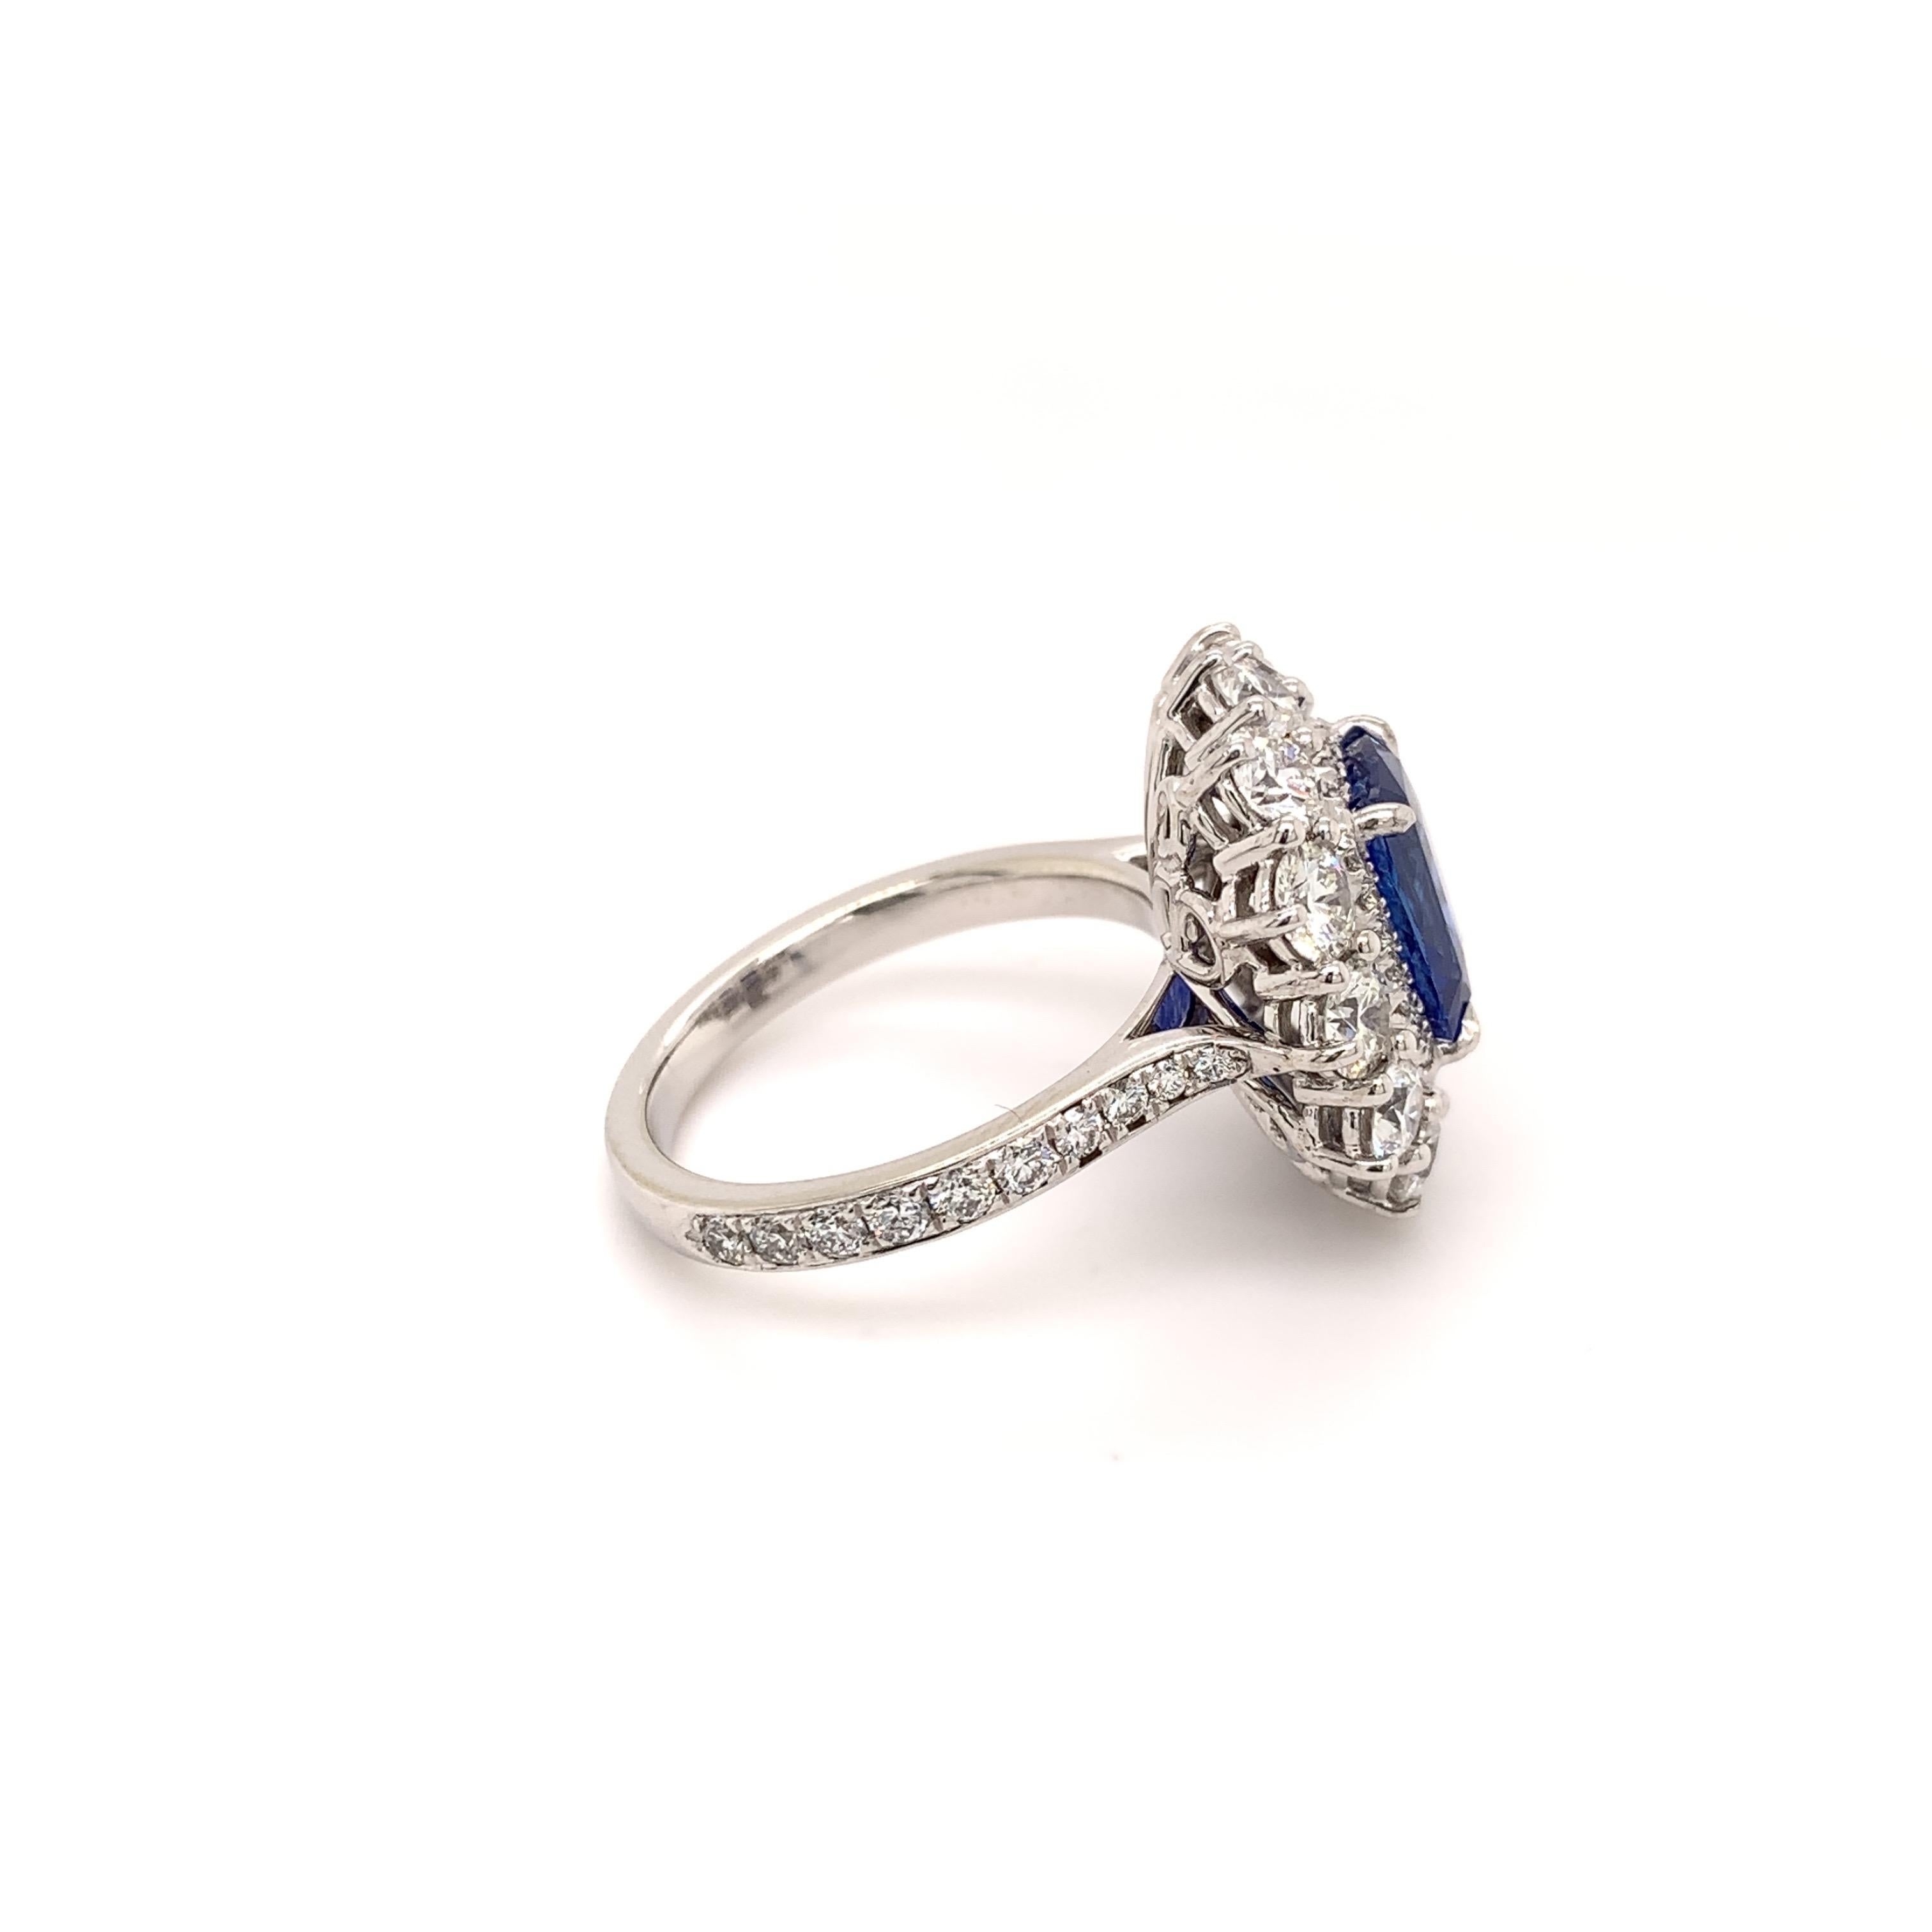 3.5 carat sapphire ring